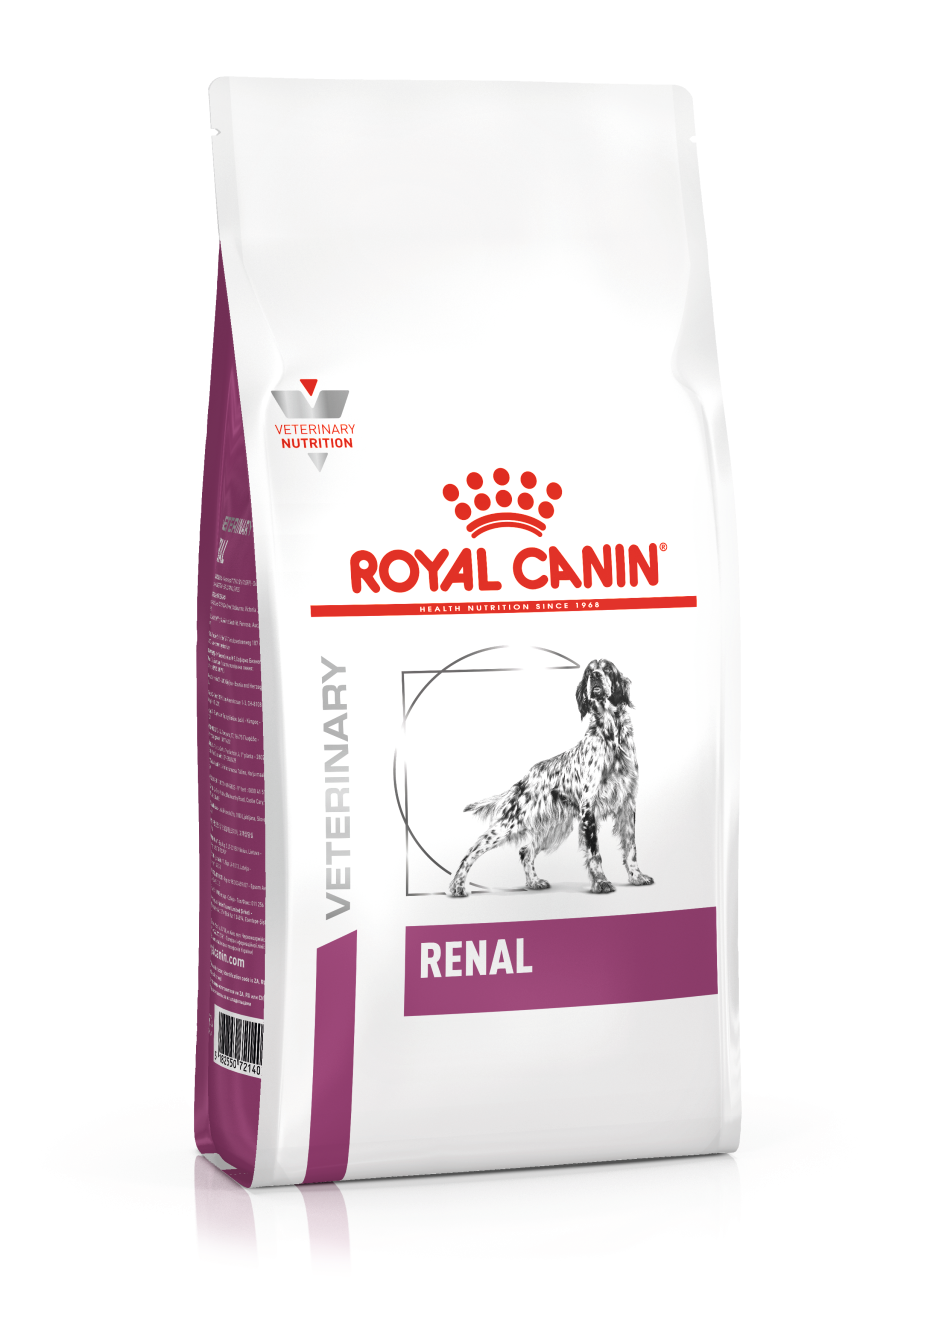 Royal Canin Renal hond <br> 2x 7 kg